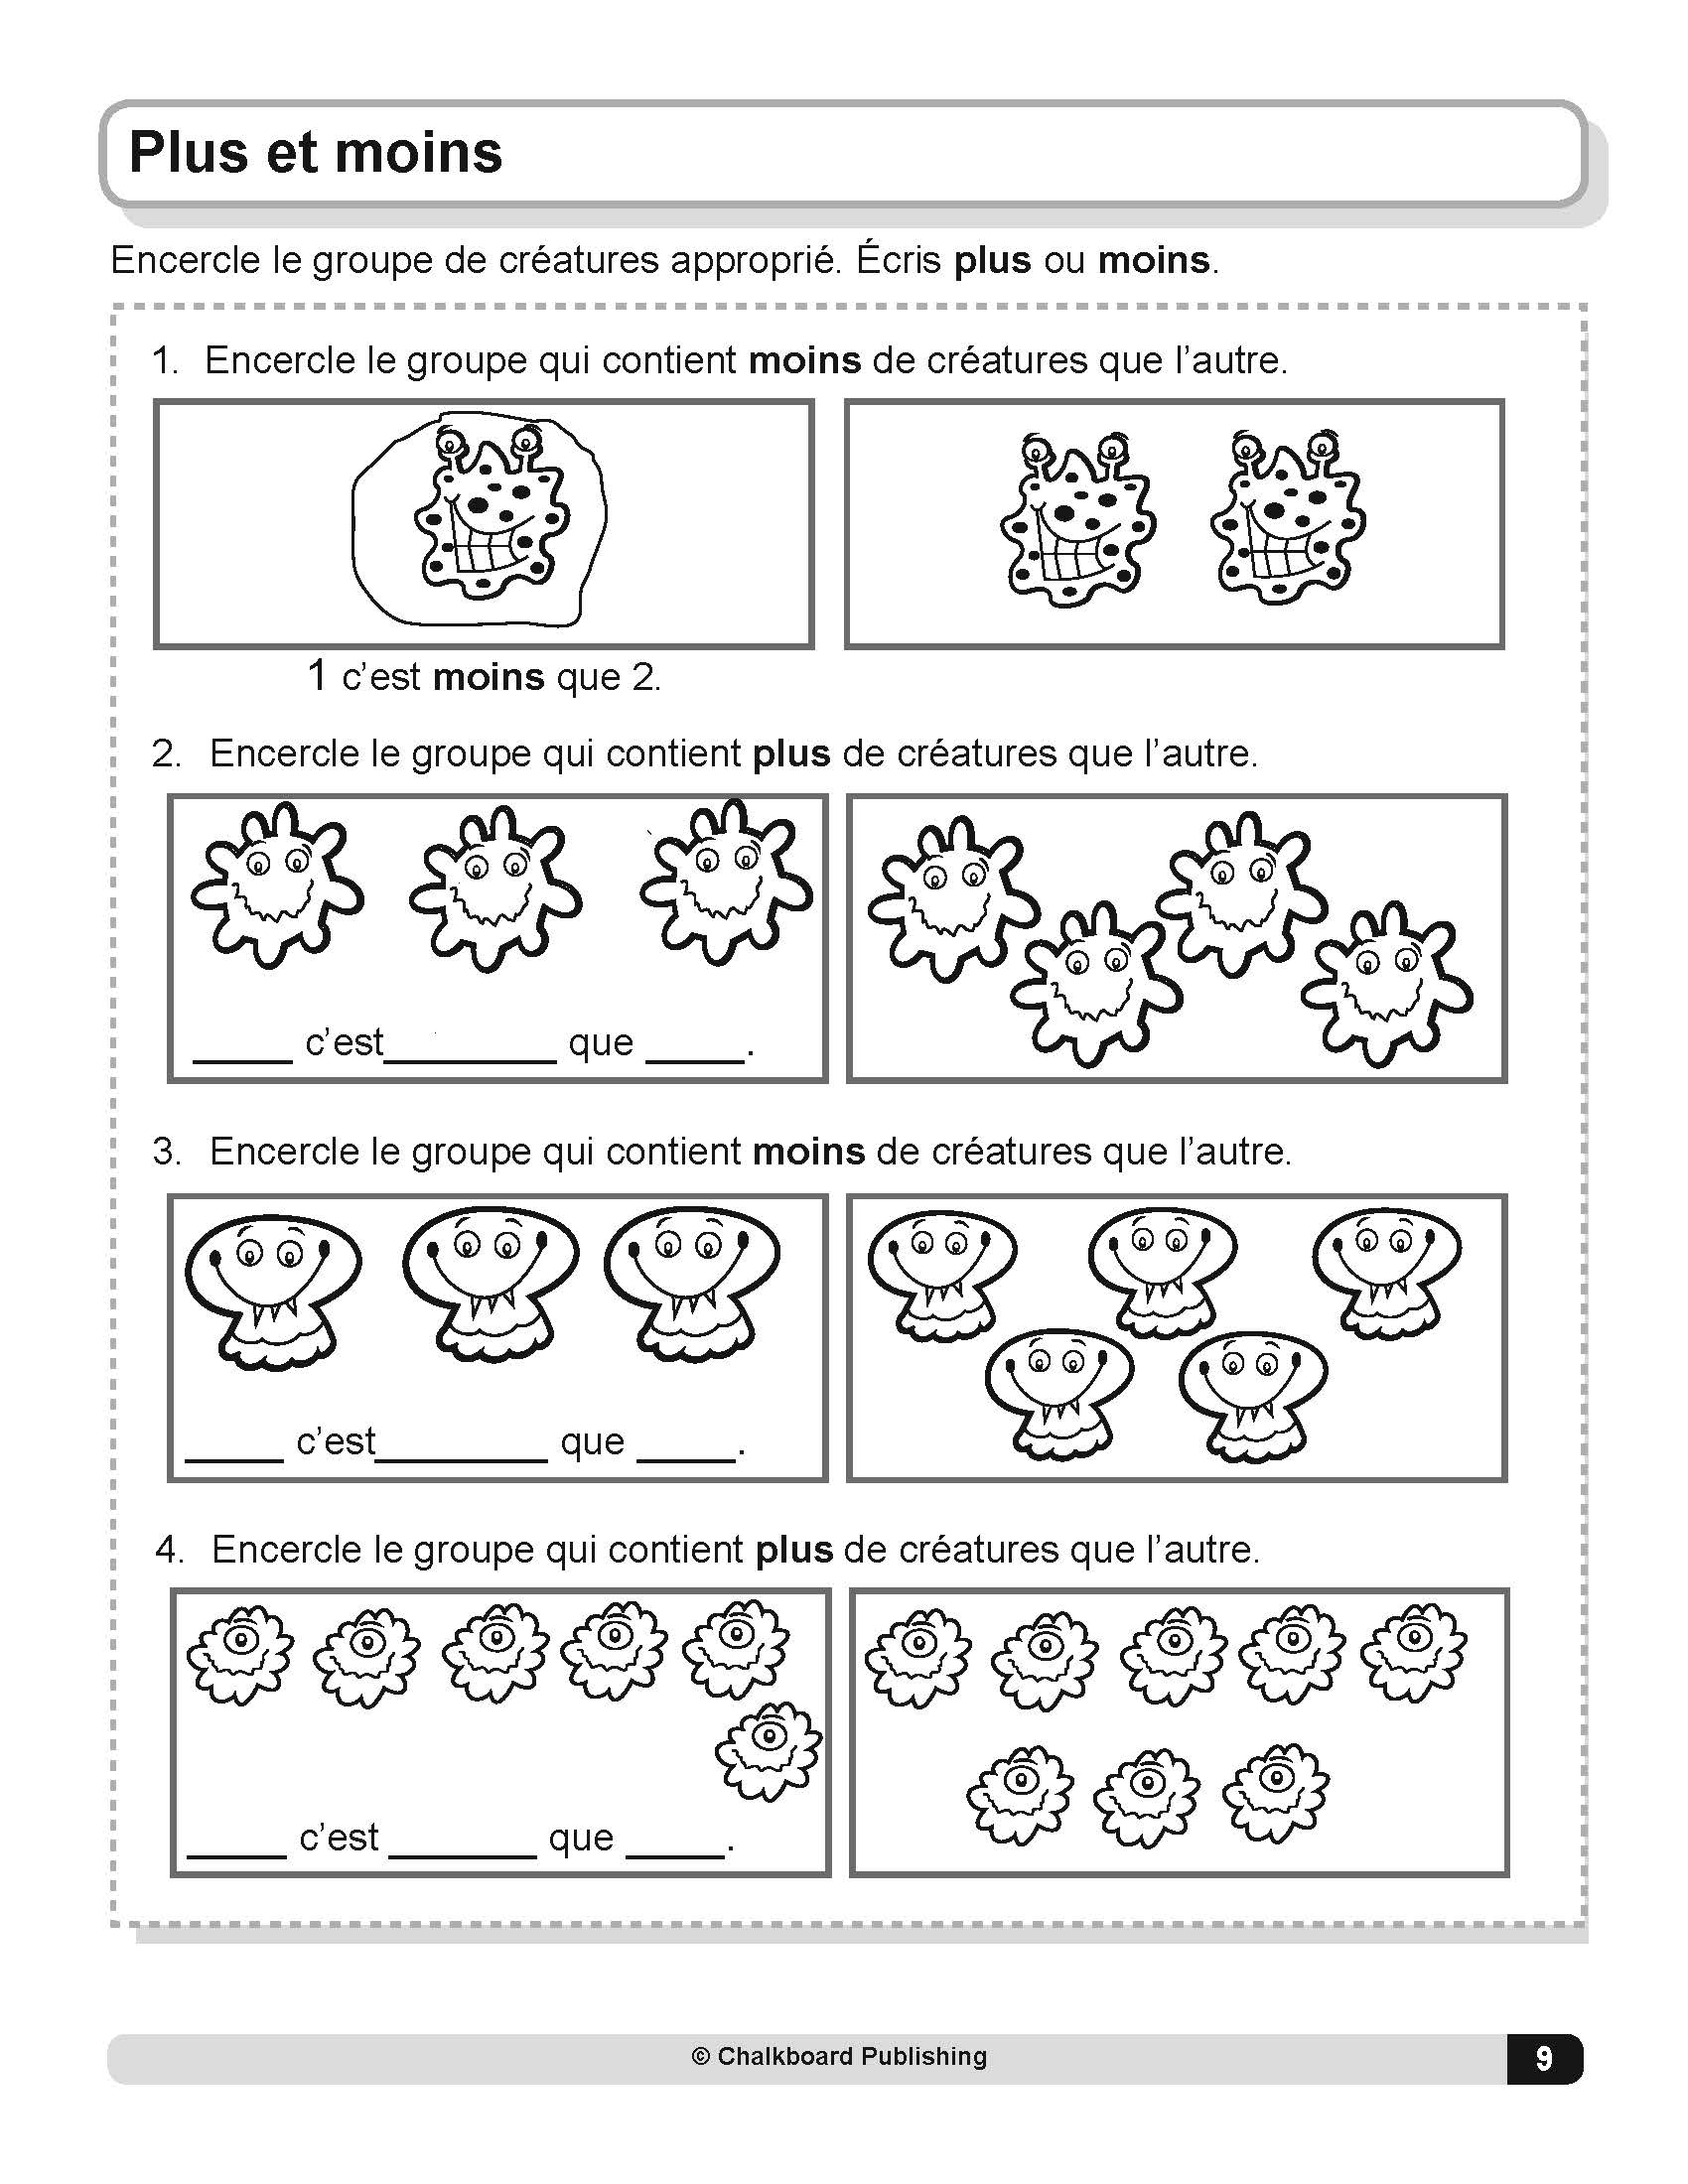 Canadian French Math Basics Grade 1 EBook Chalkboard Publishing